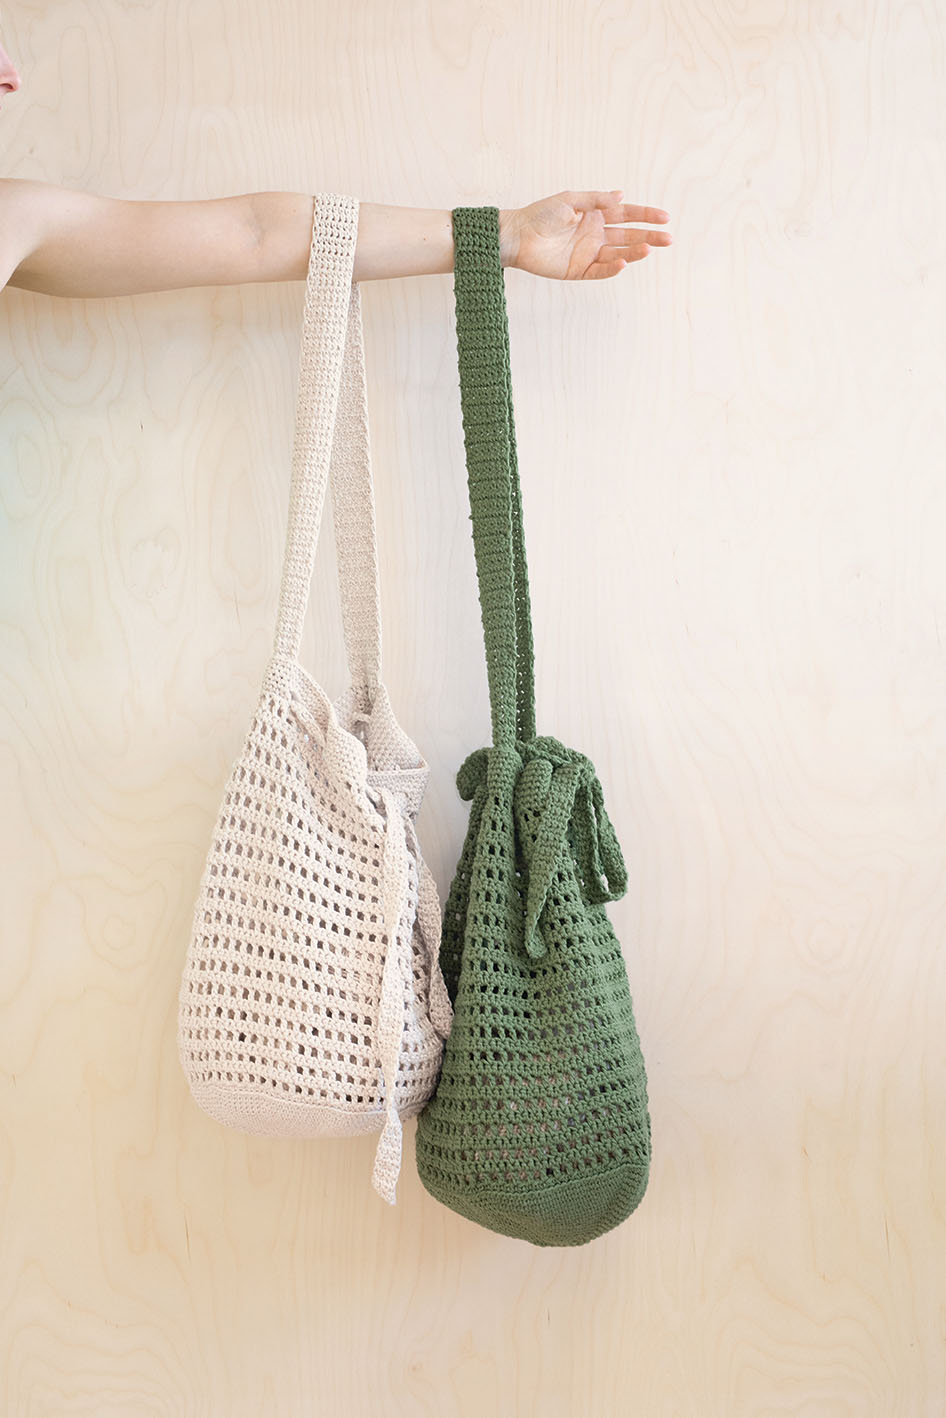 Buy Generic AUAU-Fashion Women'S Handbags Transparent Jelly Bag